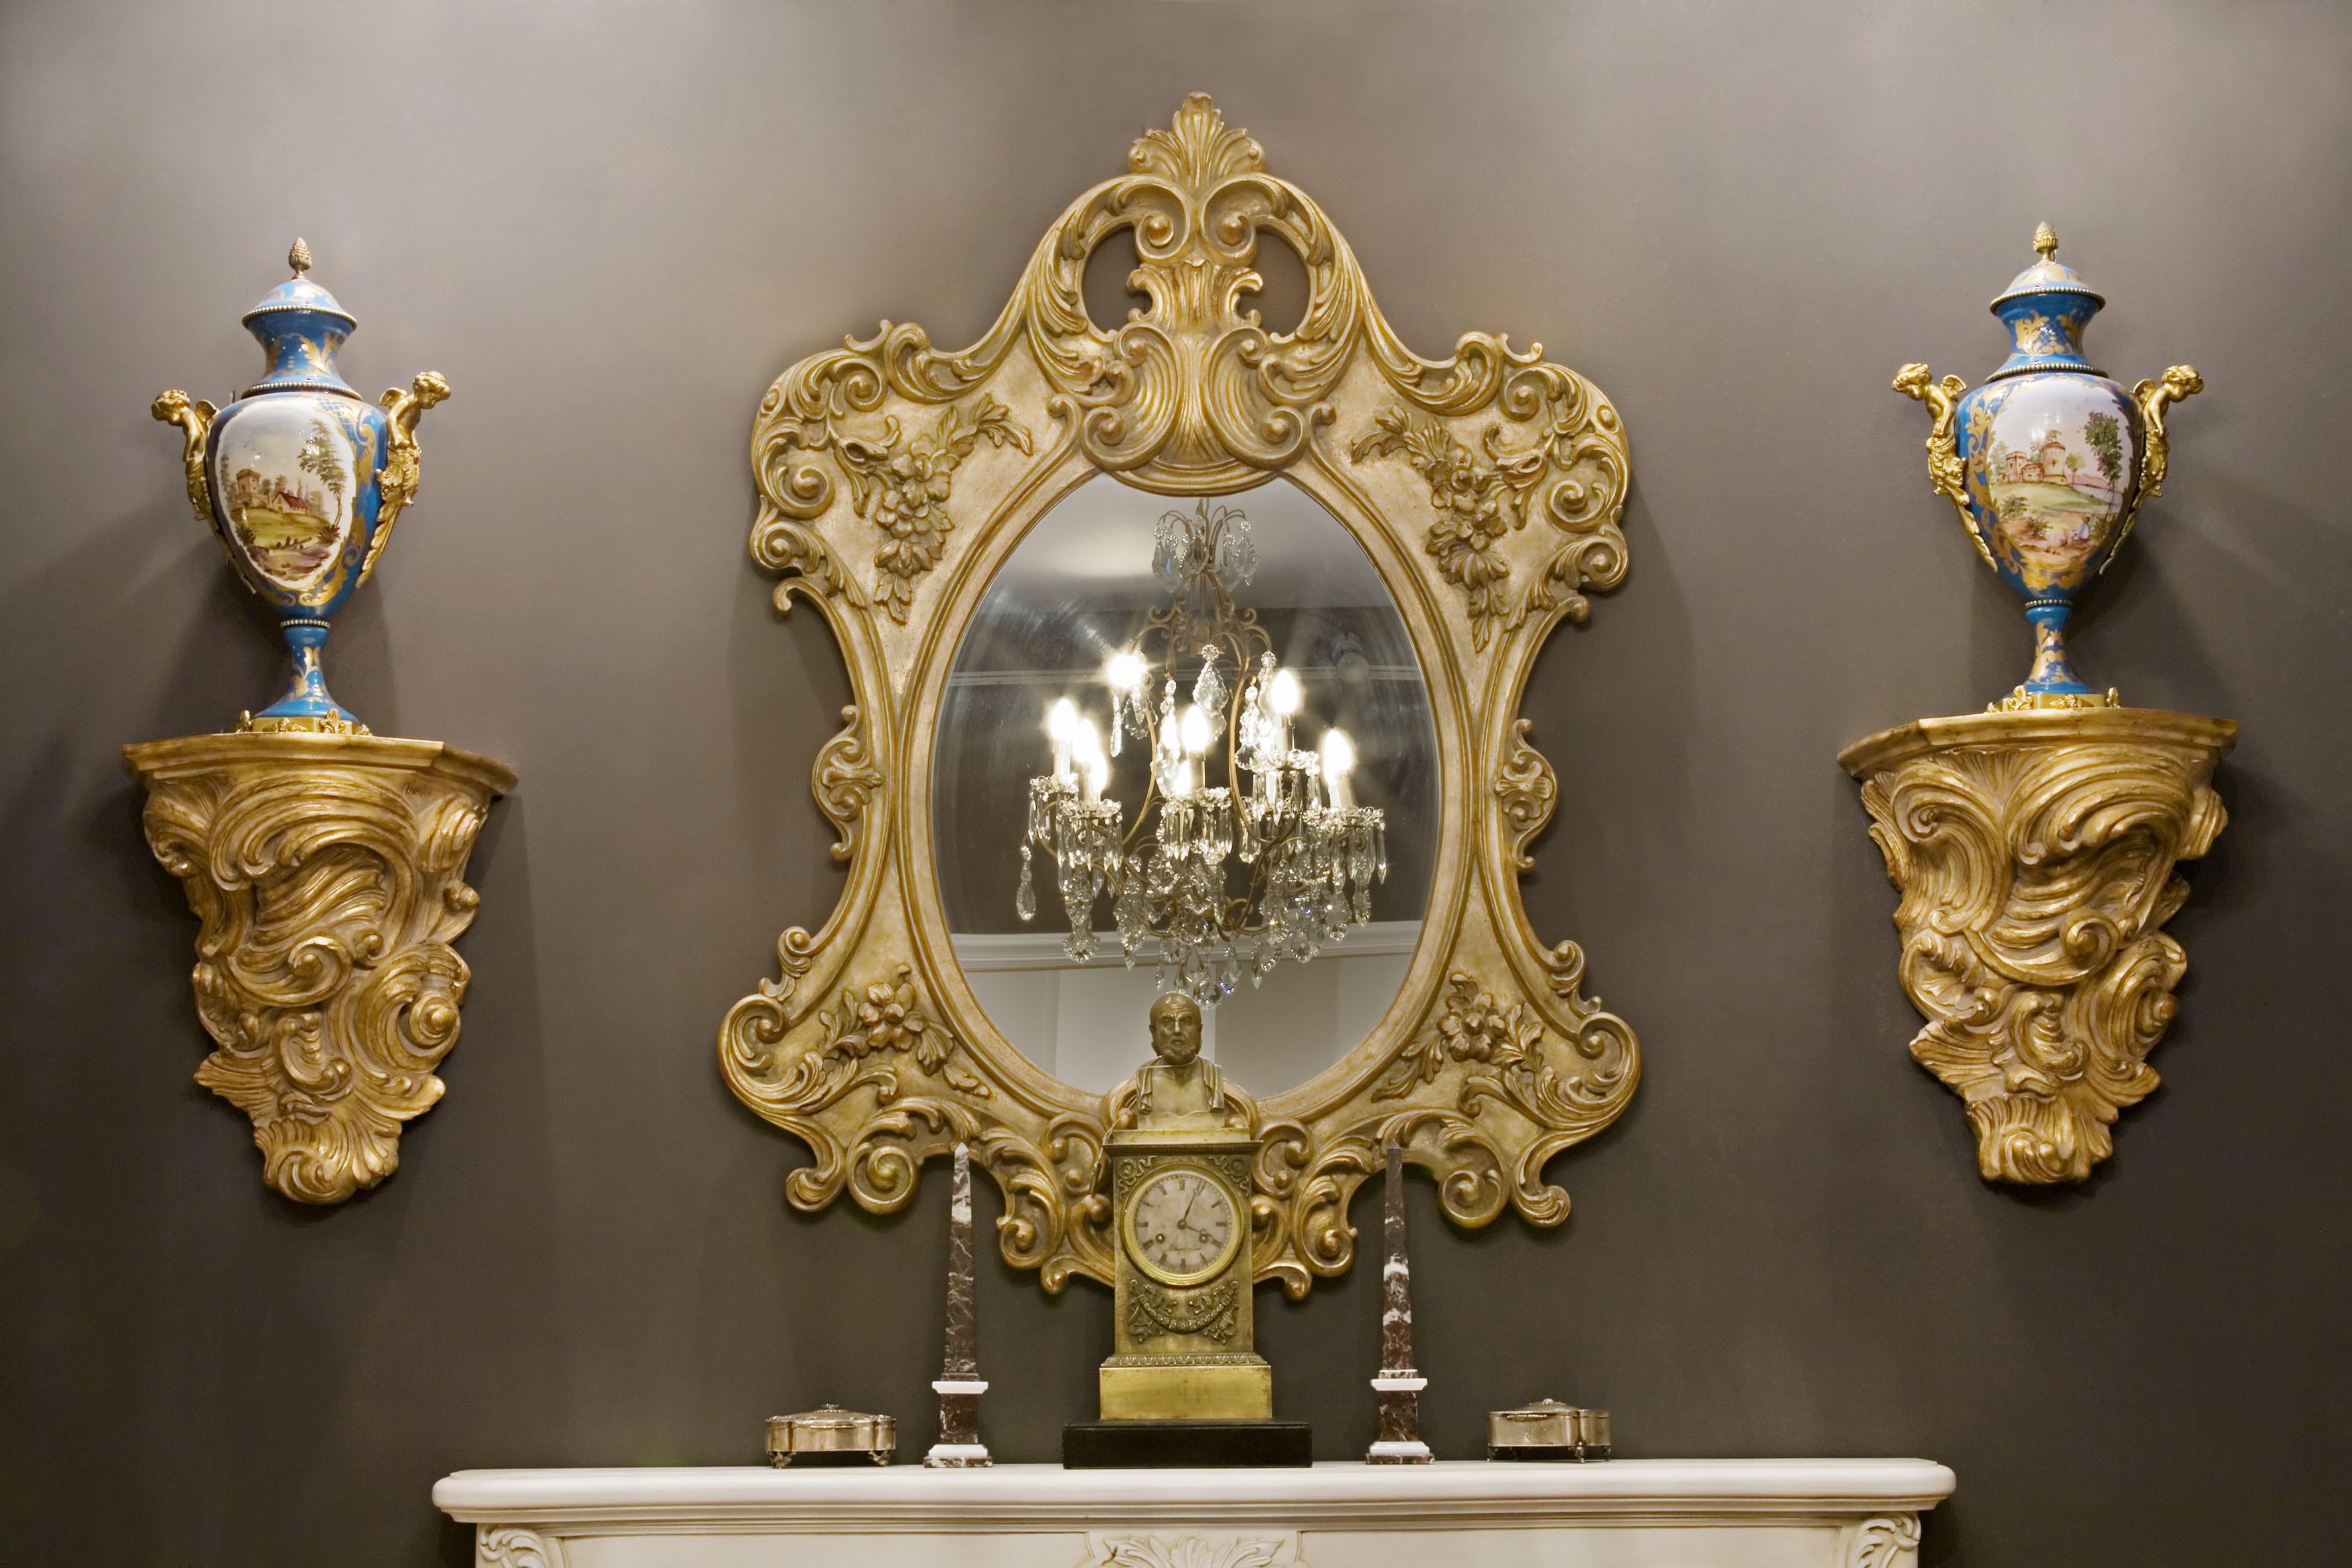 20th century Italian Neapolitan, Louis Philip, hand carved wood, Mirror, gold leaf gilding.
Size: Height 130cm, width 99, depth 5cm.

 